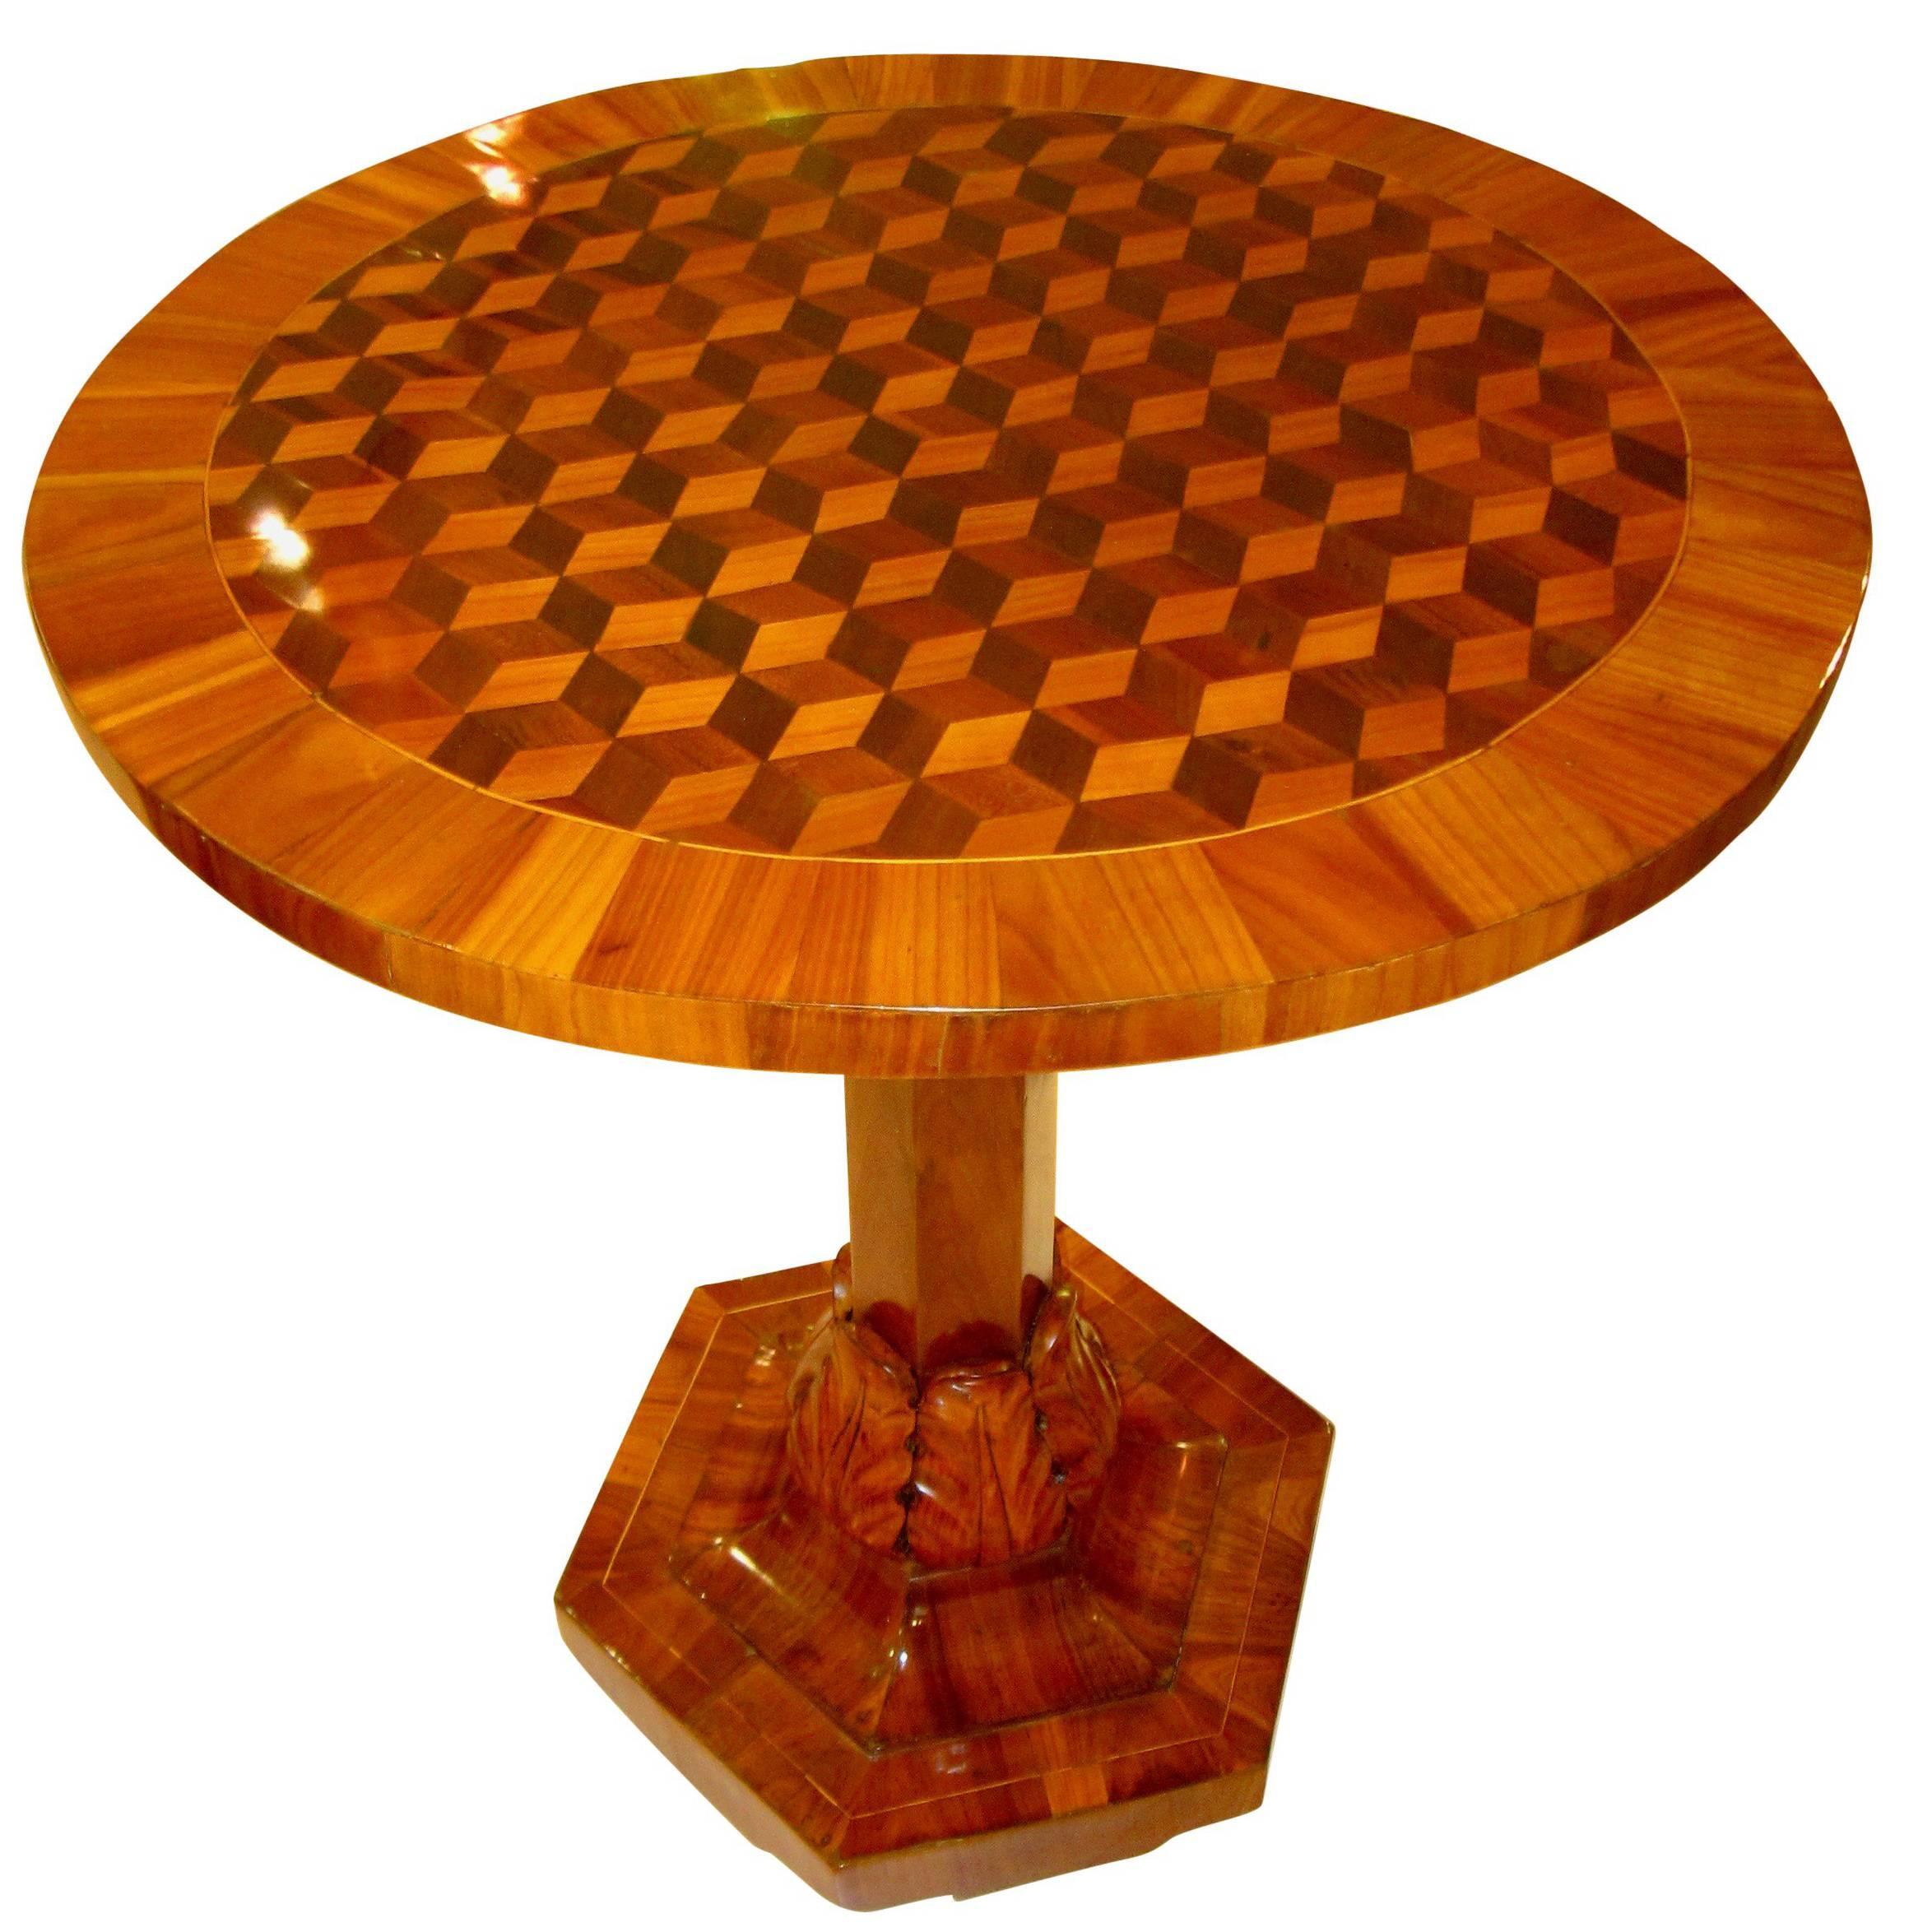 Biedermeier Side Table, Cherrywood with 3D Inlays, Germany circa 1820/25